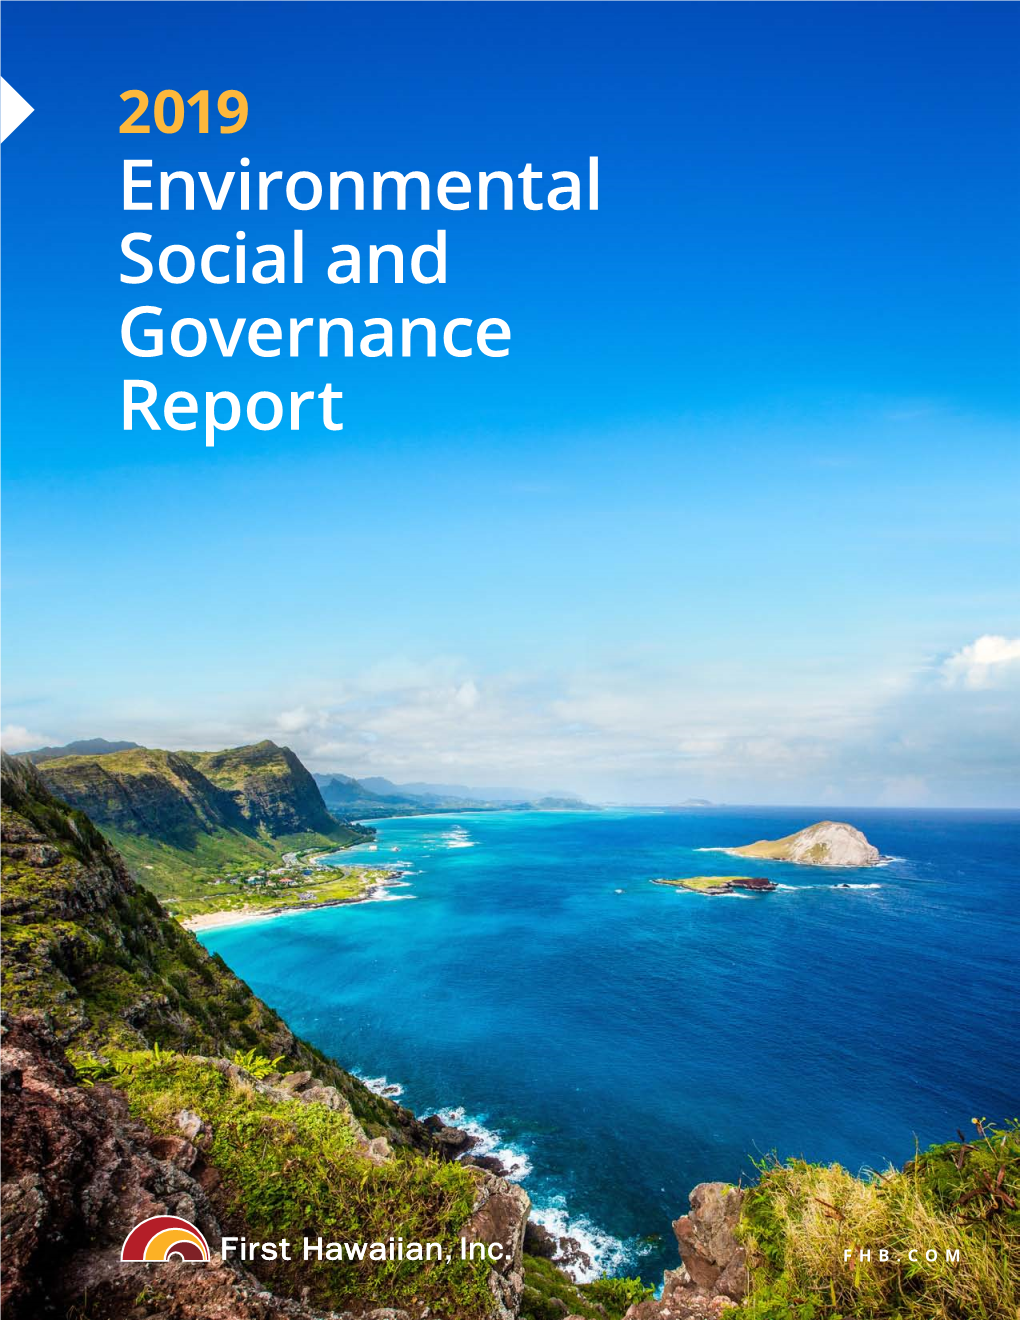 2019 Environmental, Social and Governance Report